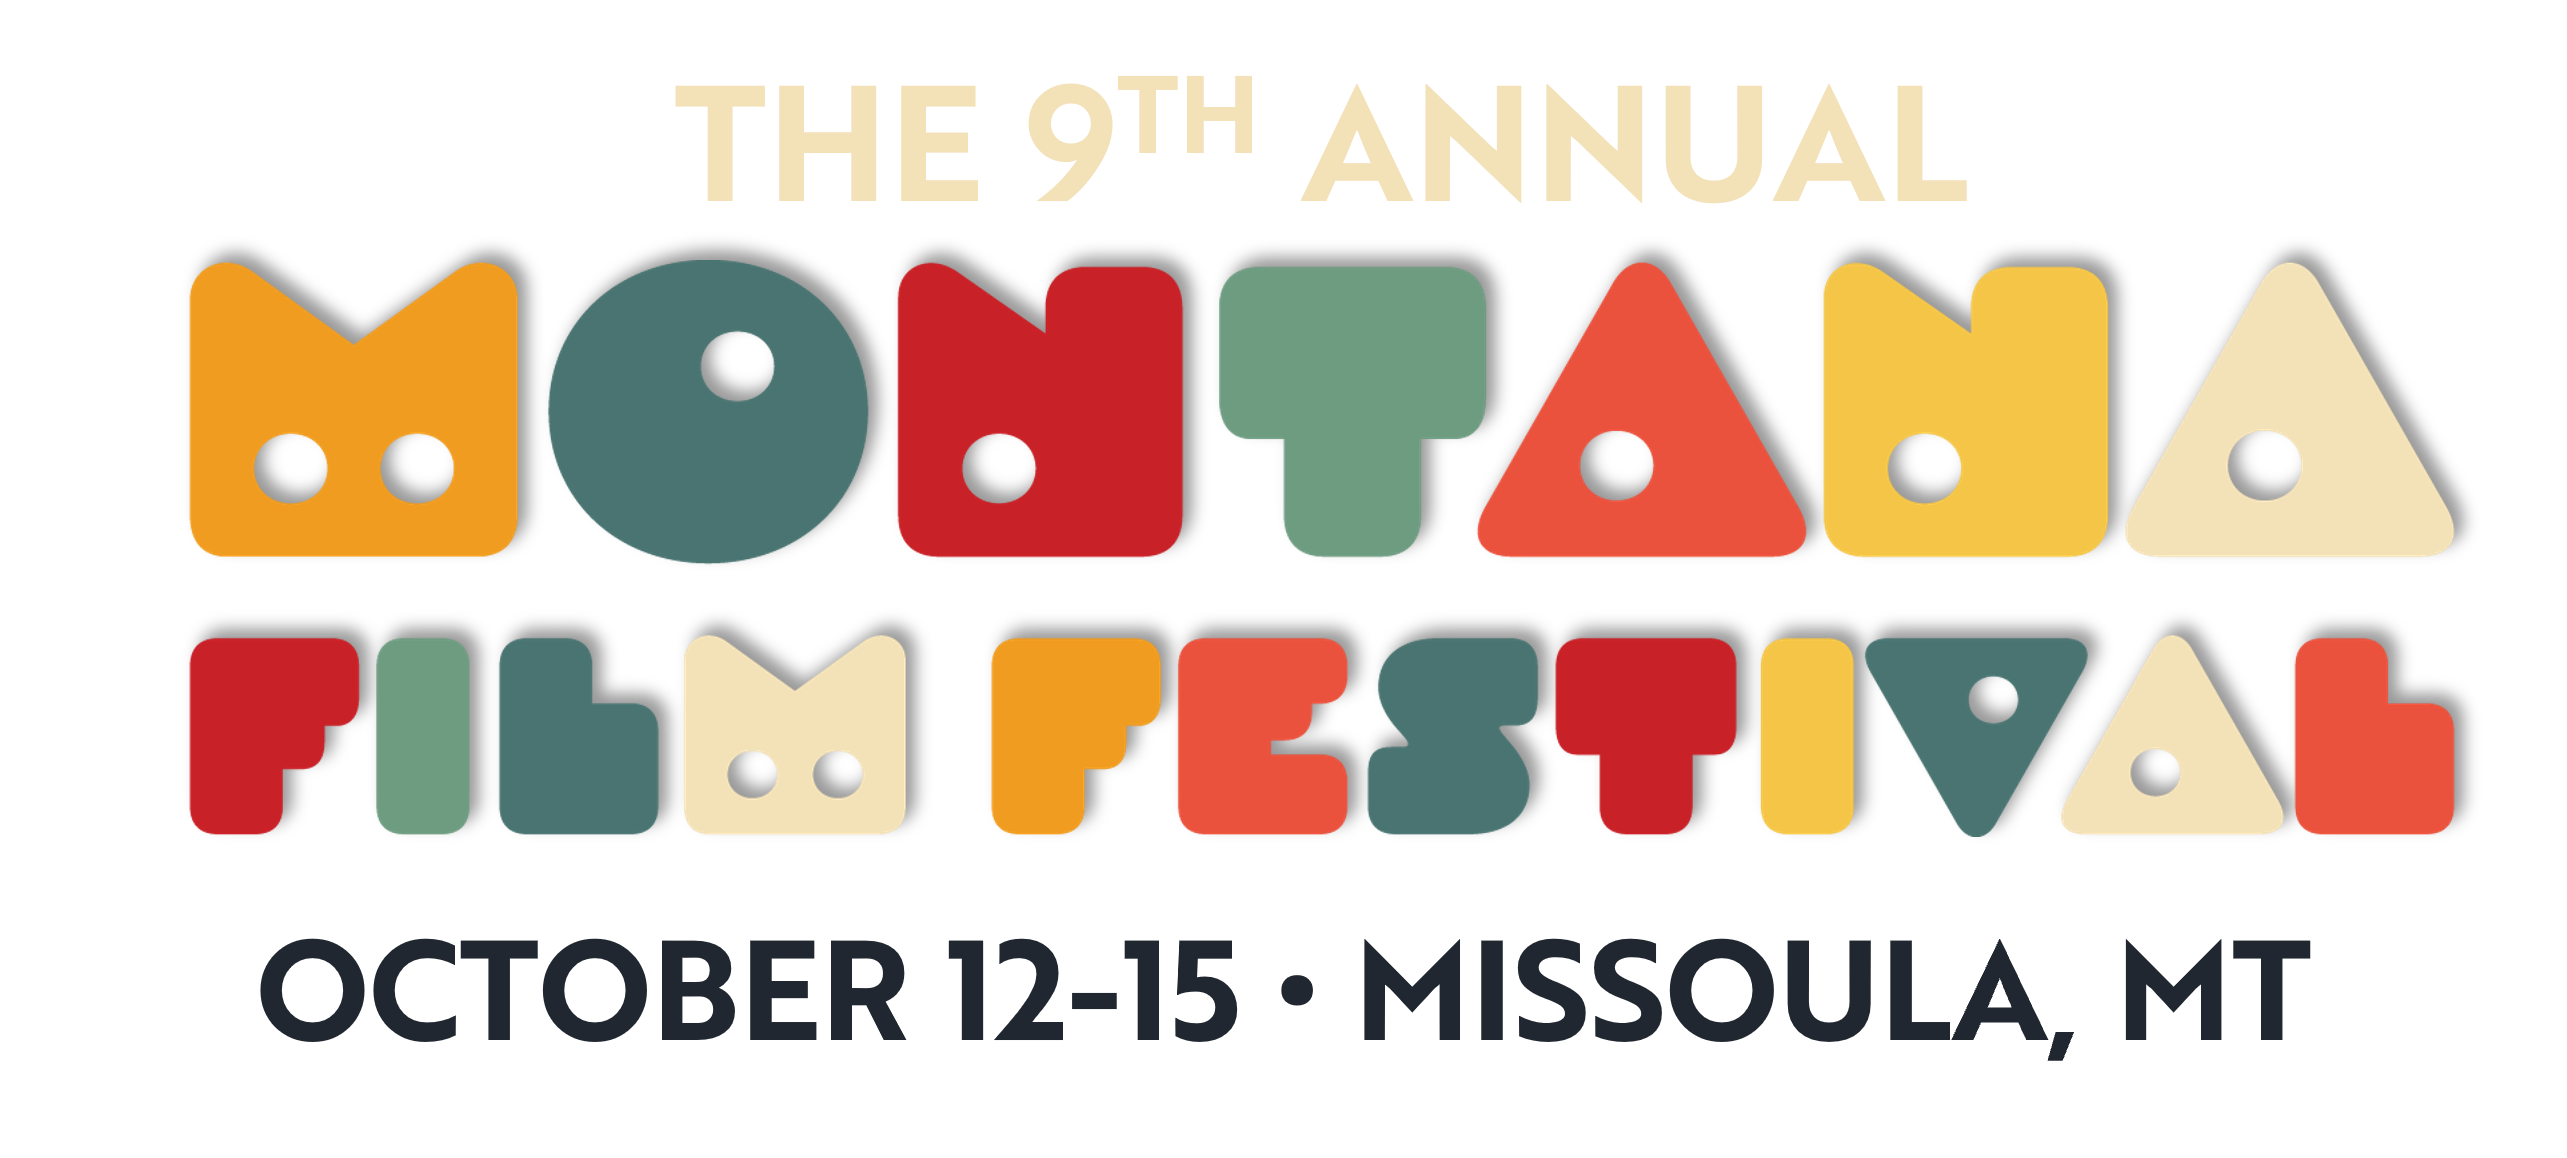 The 9th Annual Montana Film Festival. October 12 to 15, Missoula, Montana.